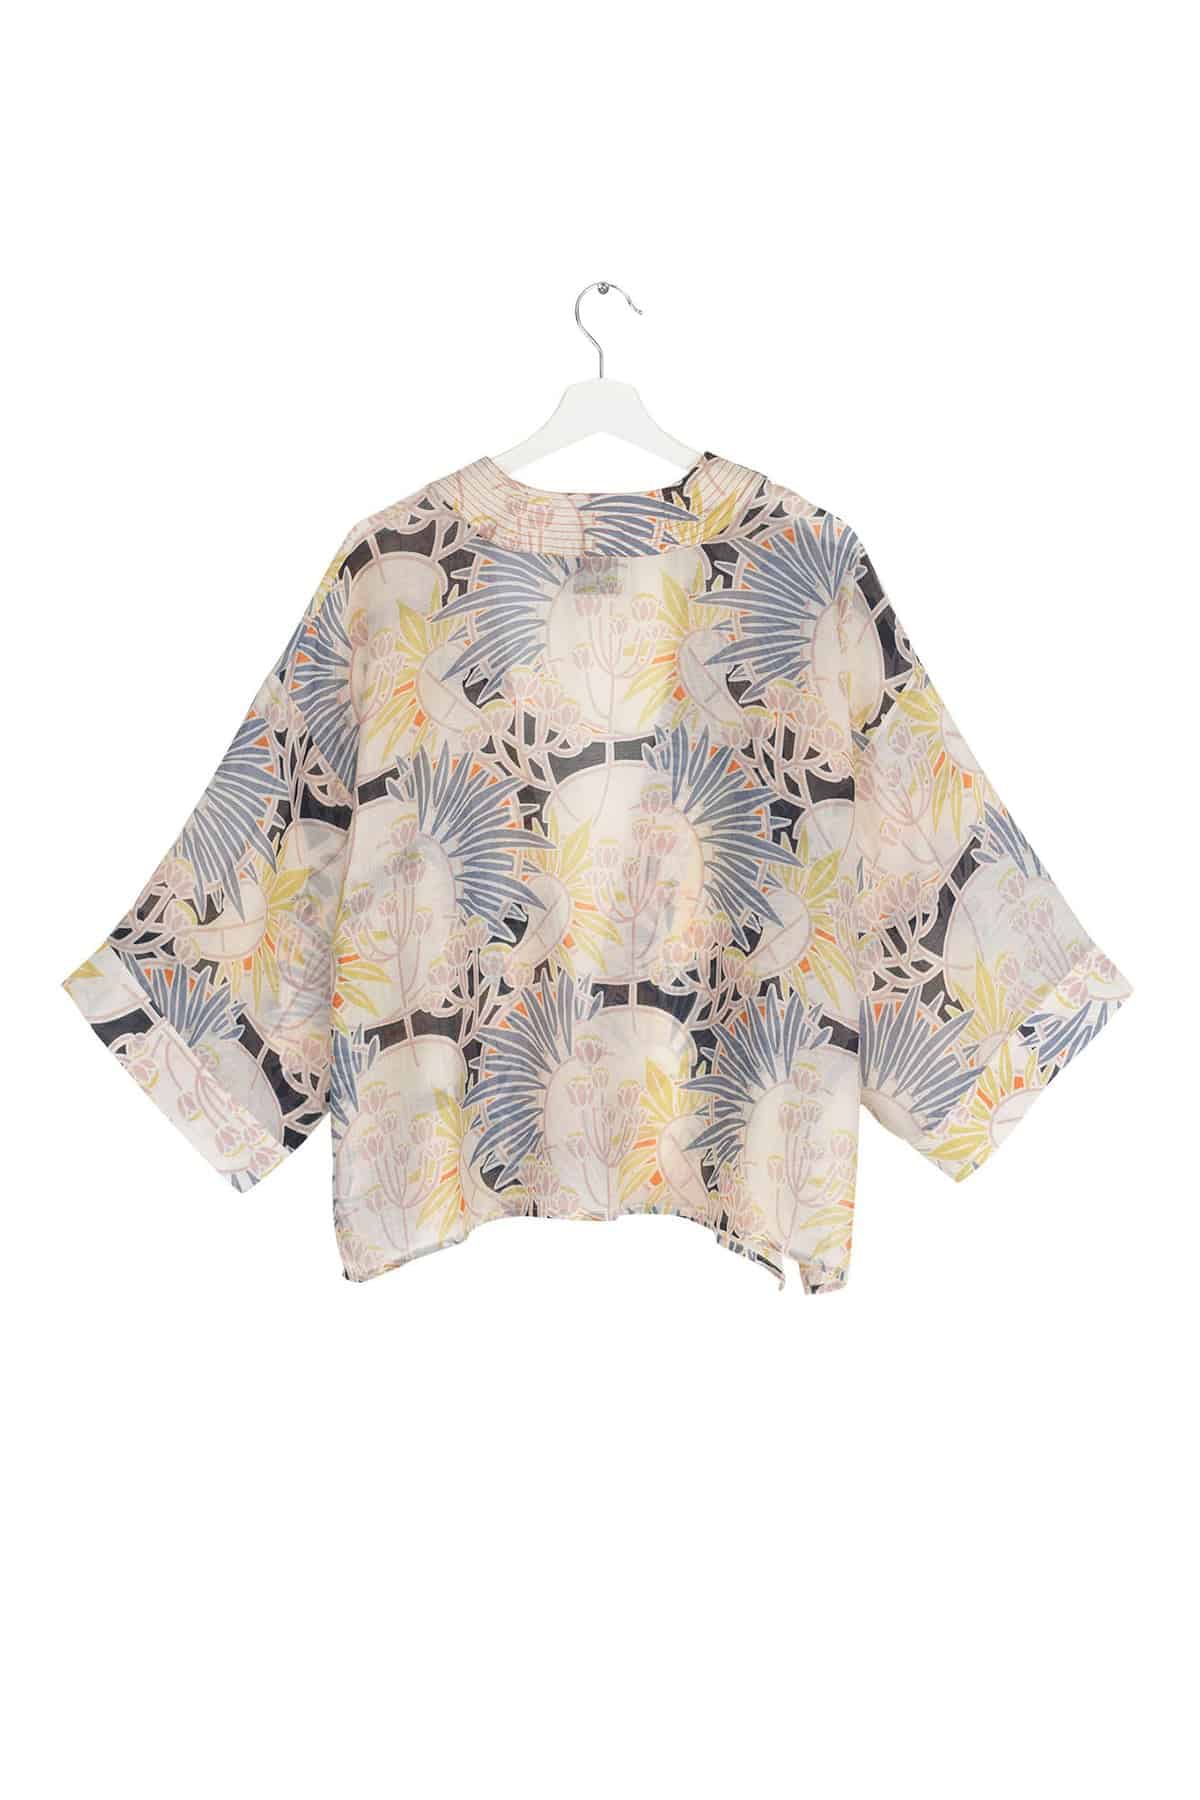 One Hundred Stars Mini Kimono - Deco Daisy Mauve - Gerrards Fashion Shop